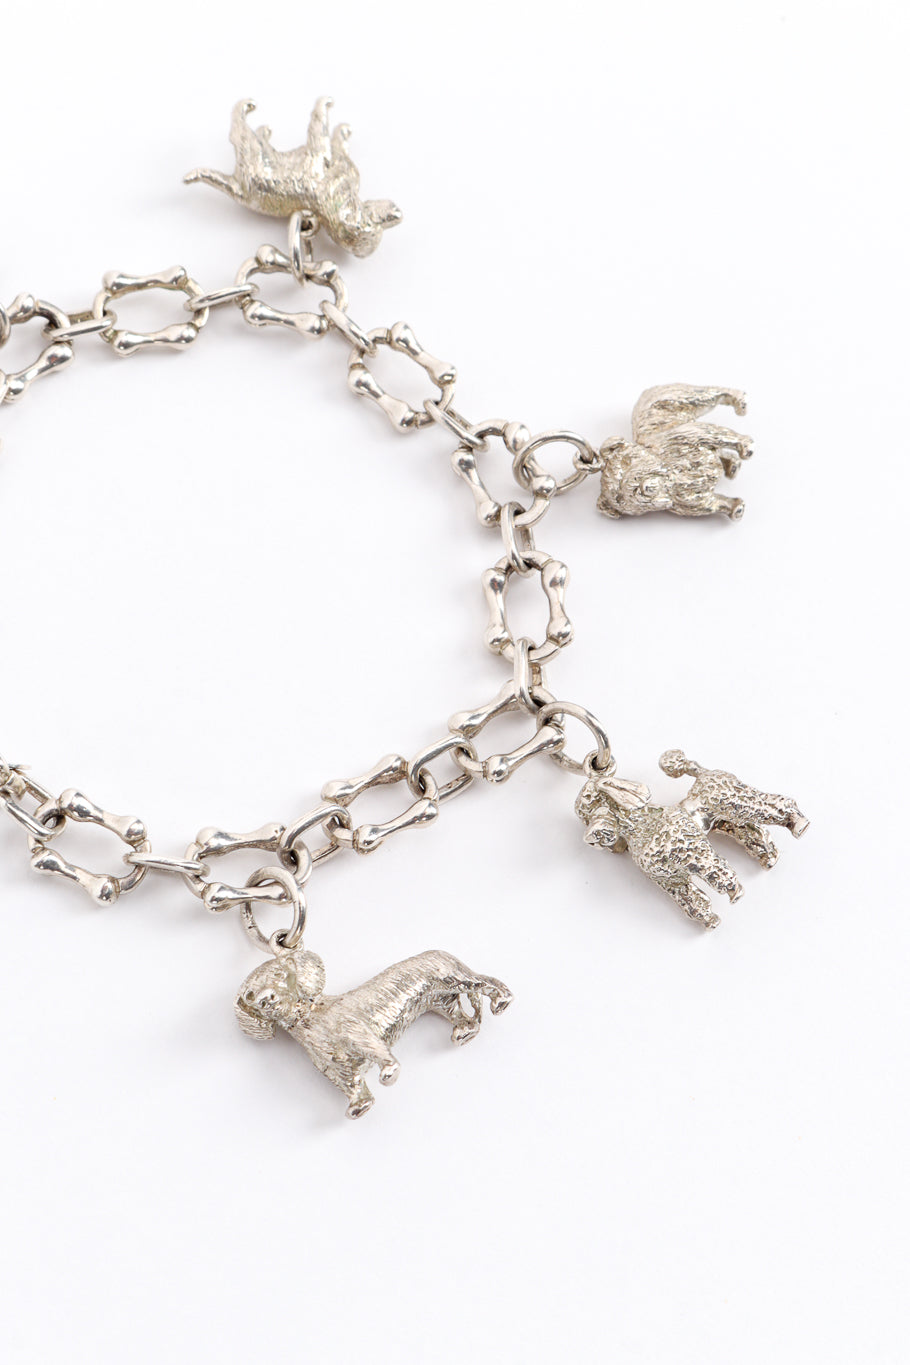 Vintage Tiffany & Co. Sterling Dog Charm Bracelet front closeup @recess la